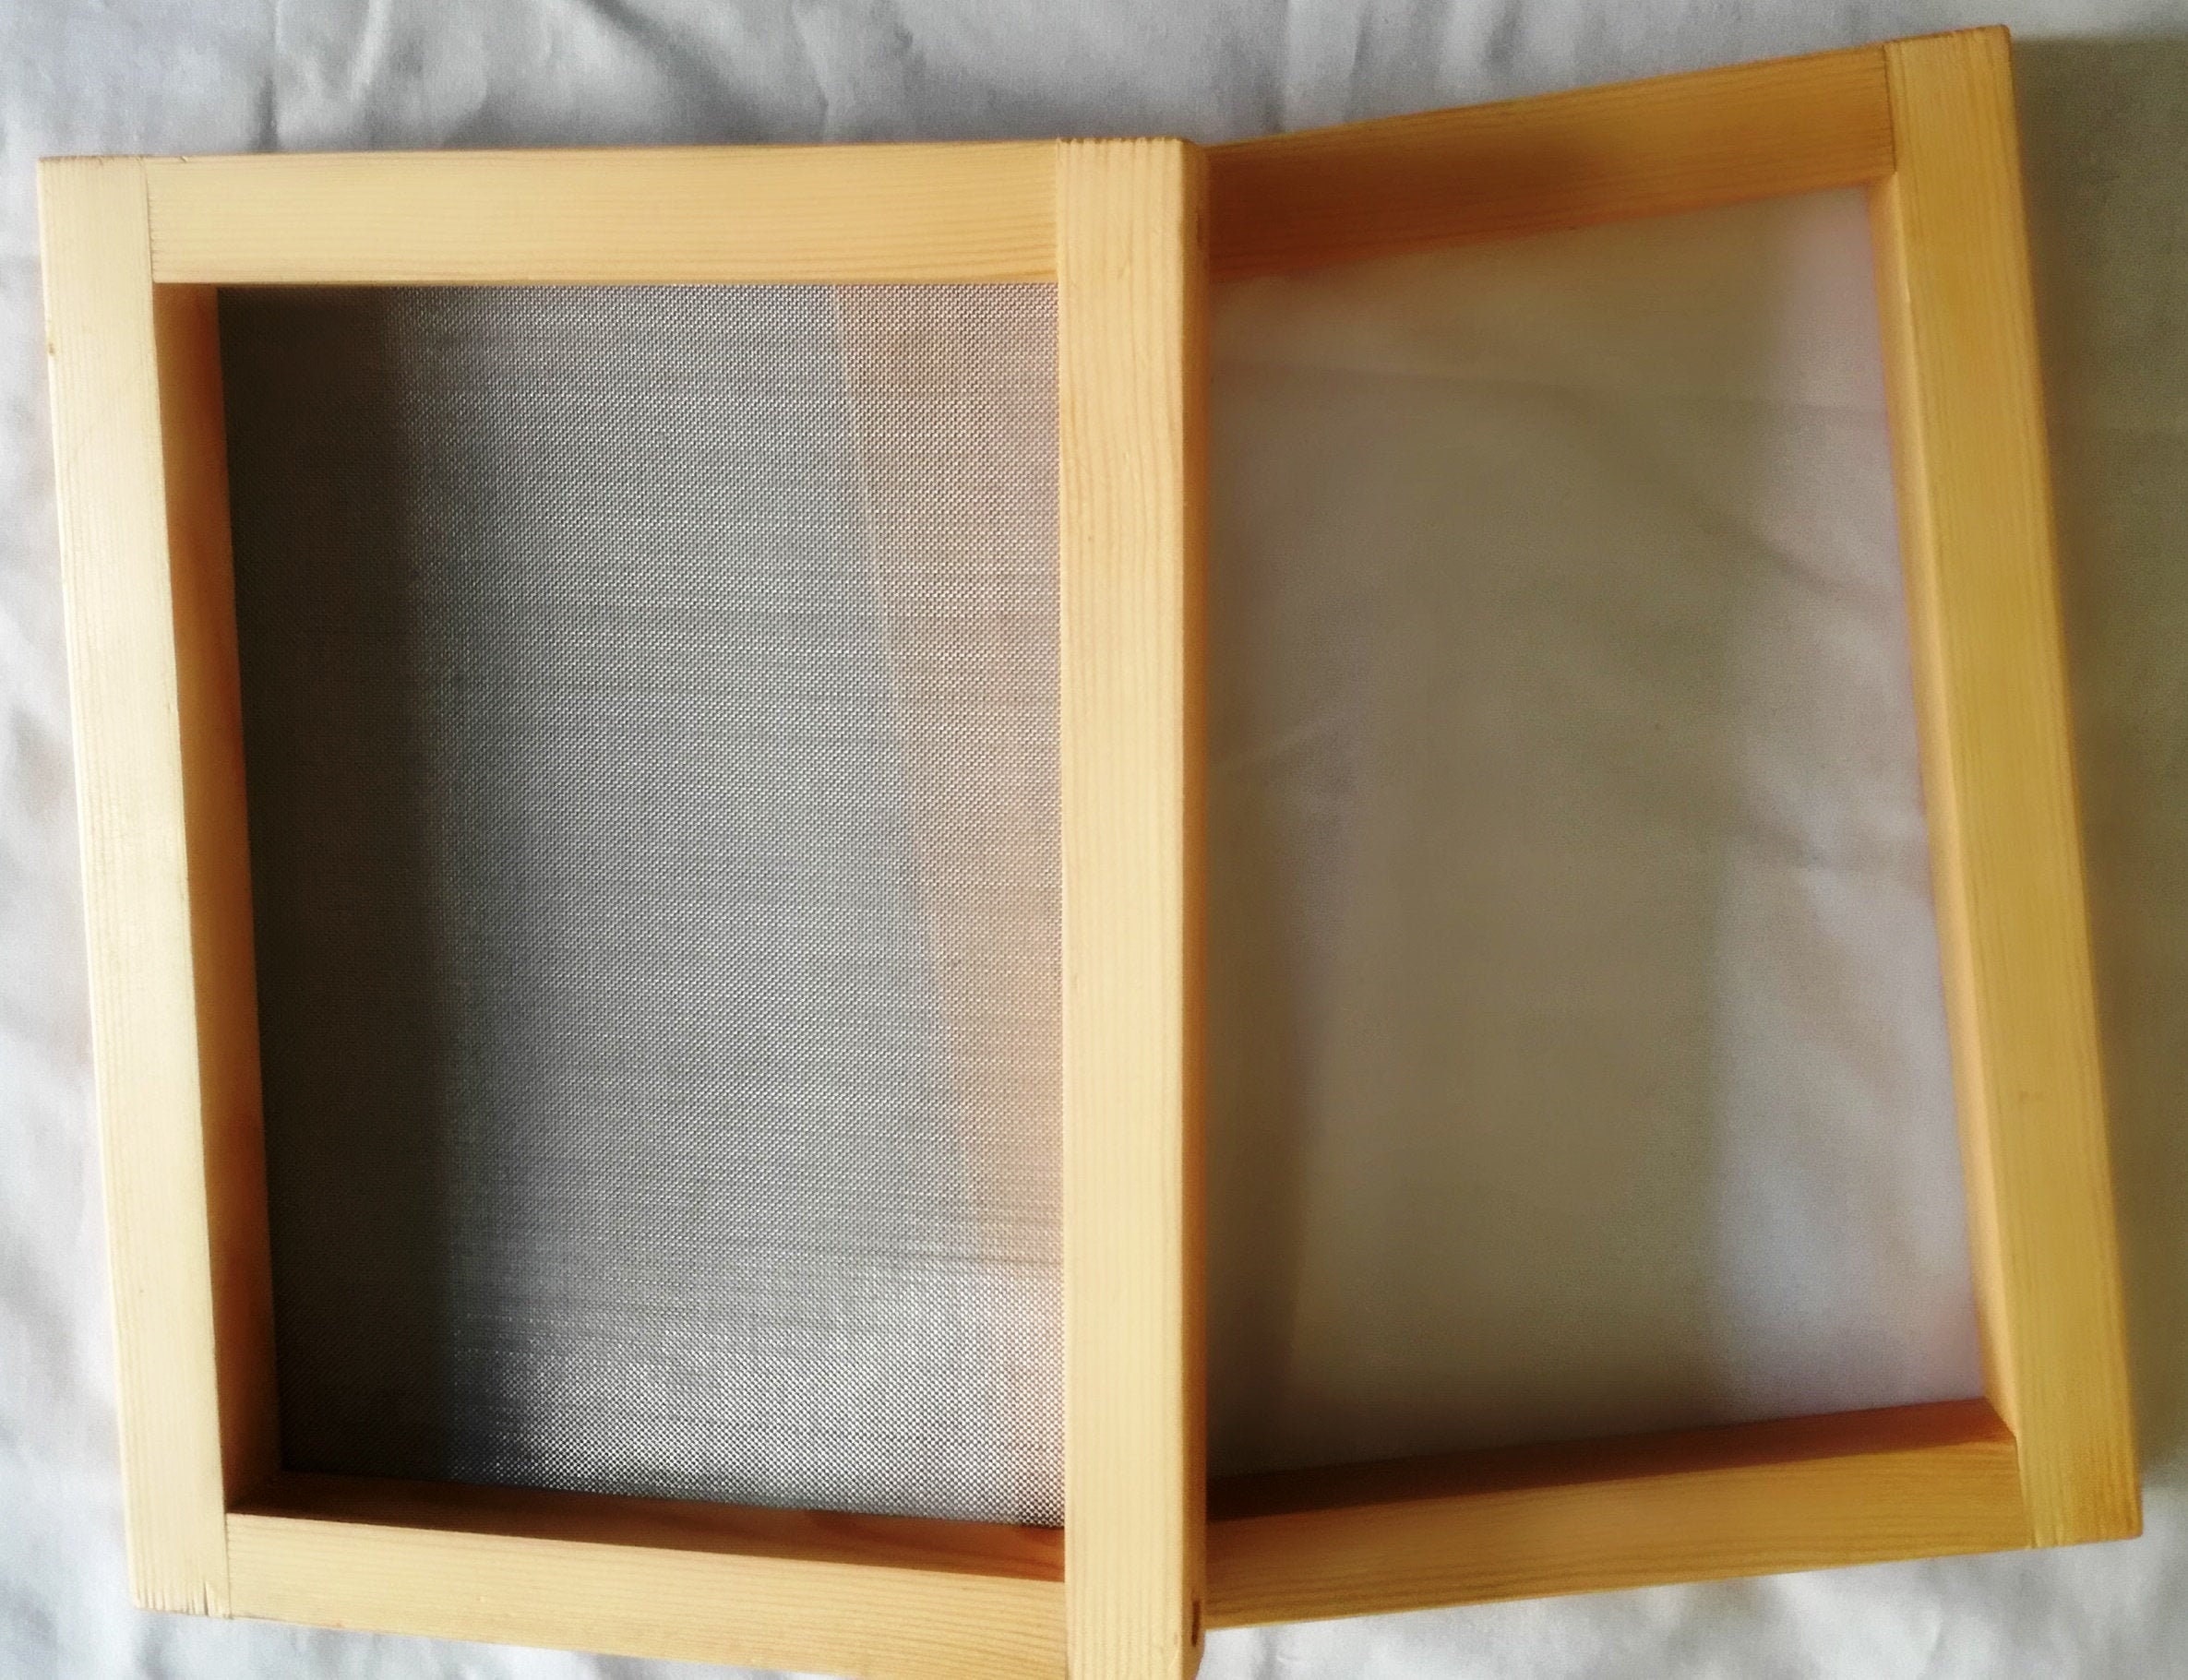 13.4x9.8 A4 Wooden Paper Making Mould Deckle Frame, Natural Color